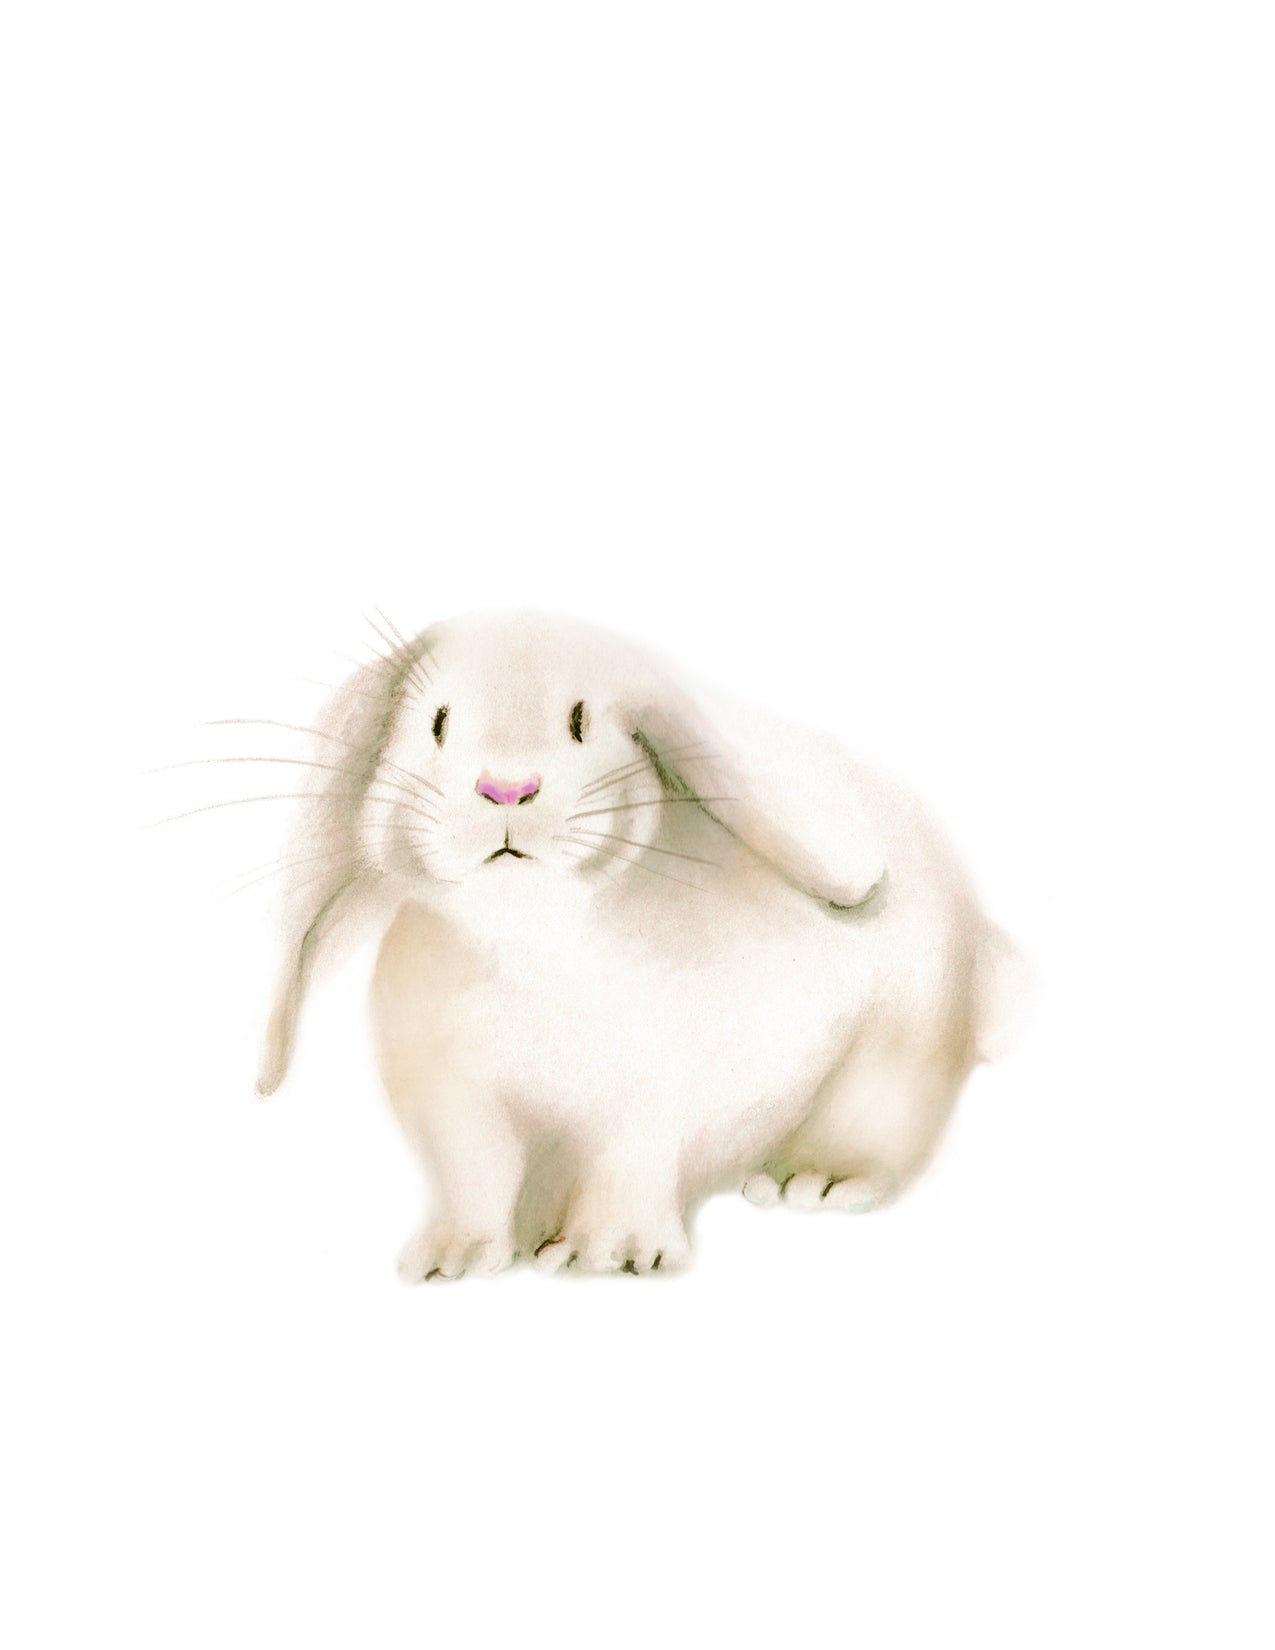 Bunny Nursery Art Print - Studio Q - Art by Nicky Quartermaine Scott